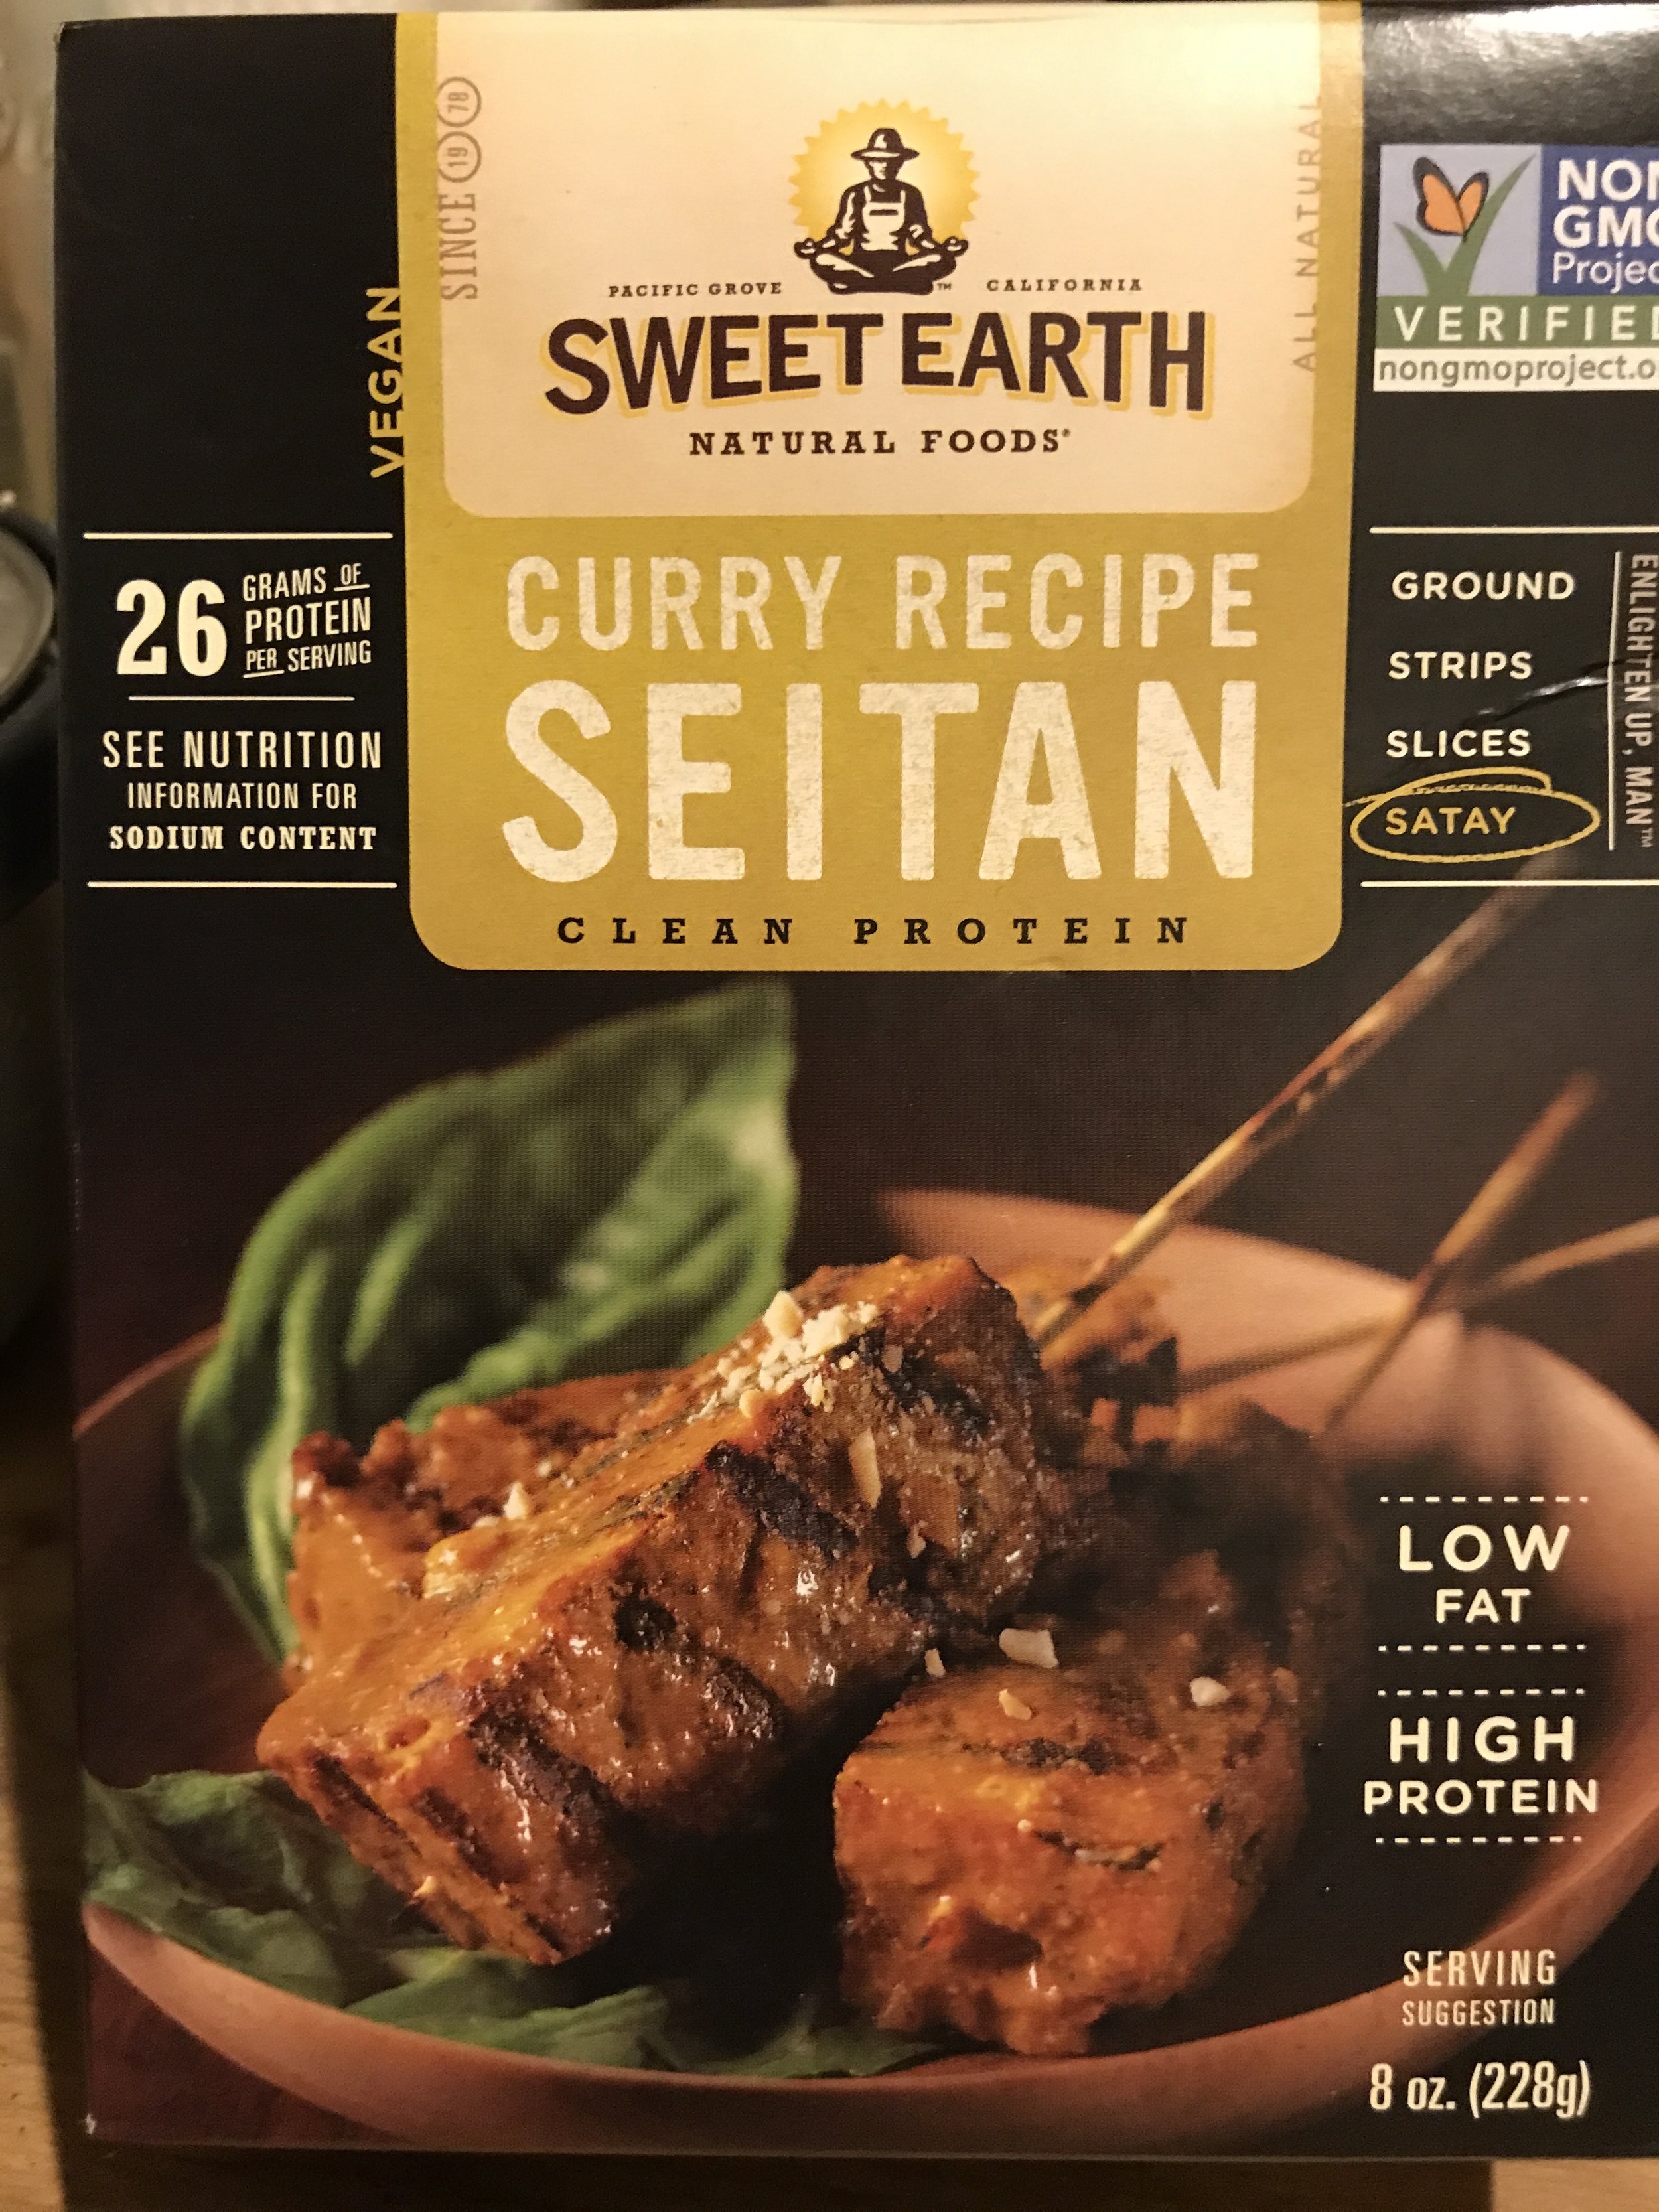 Sweet Earth curry seitan made with vital wheat gluten